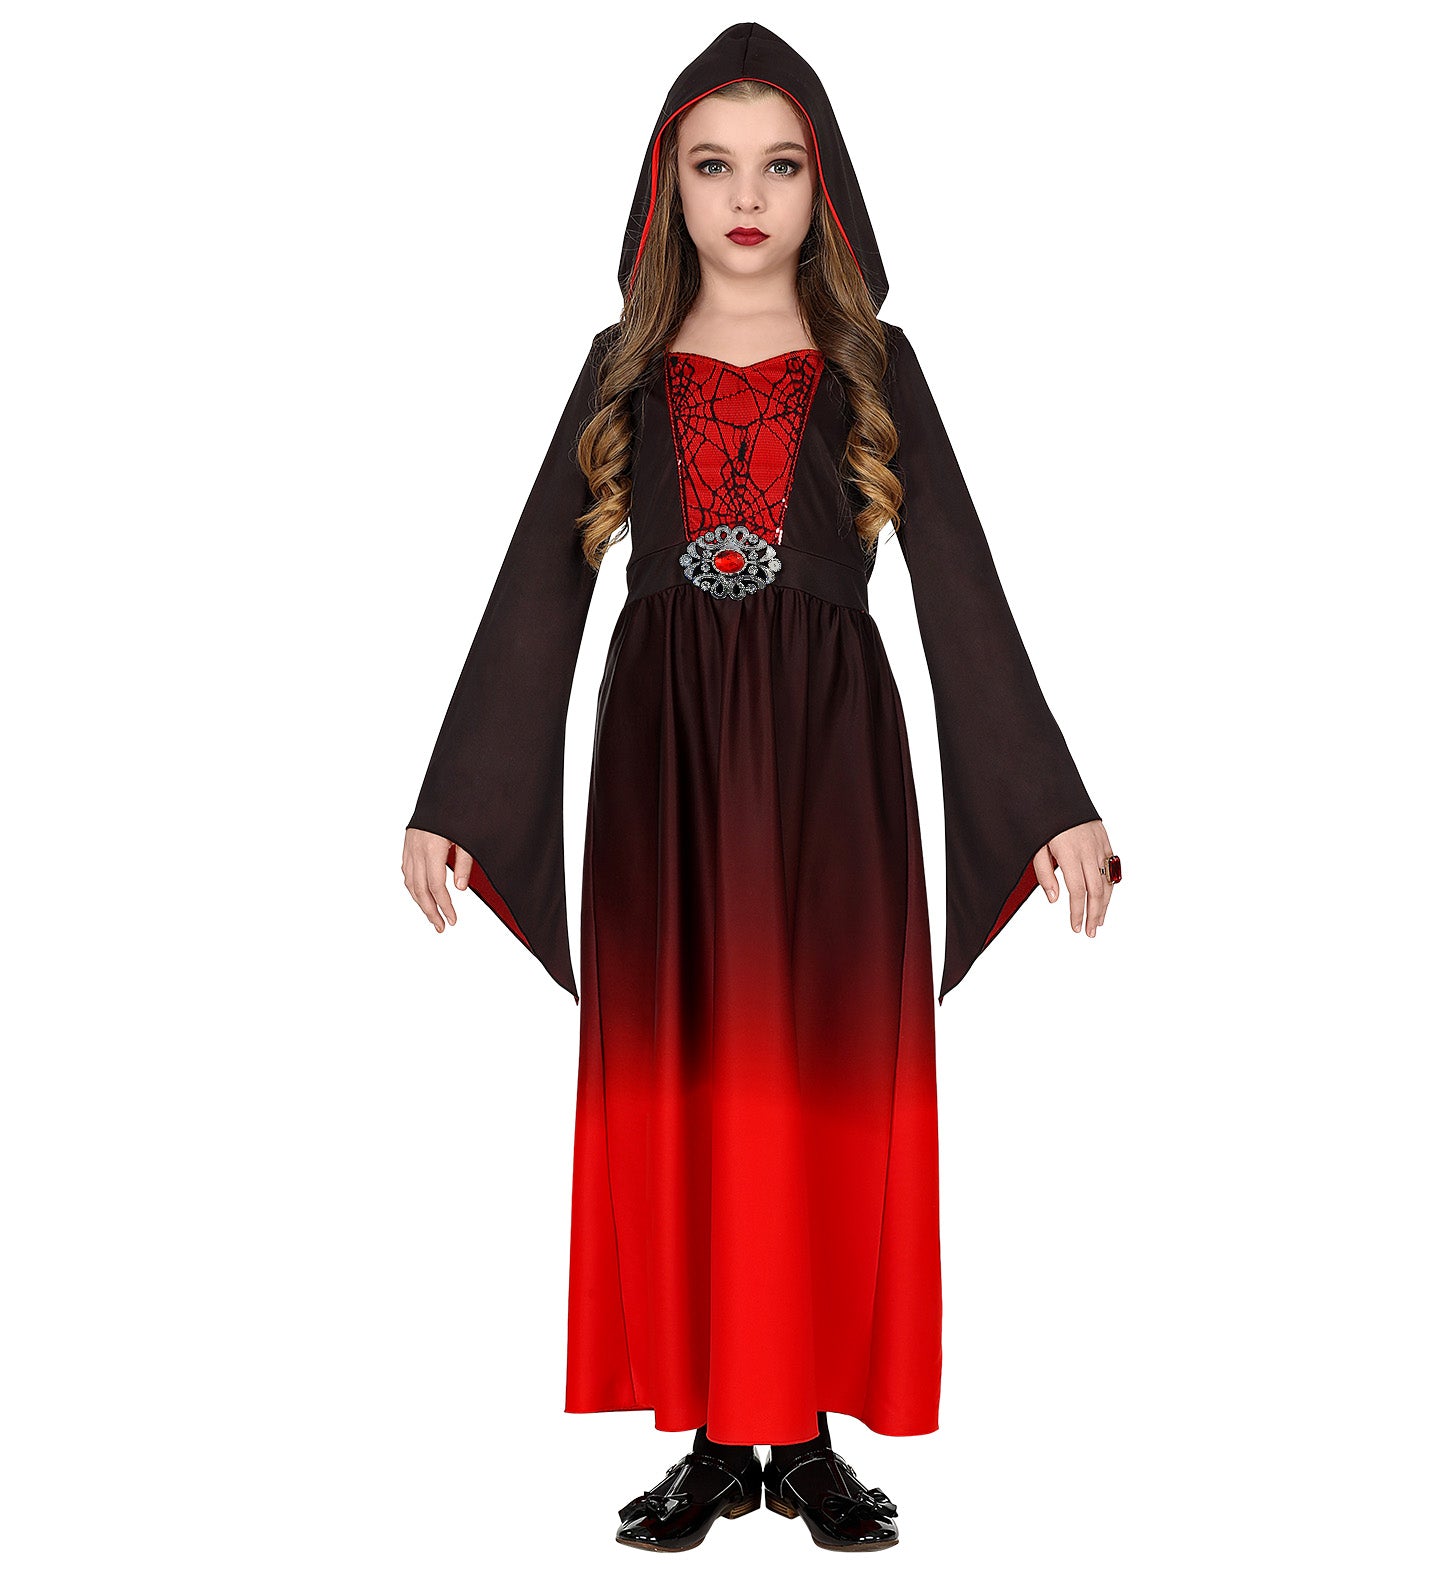 Gothic Lady Child Costume